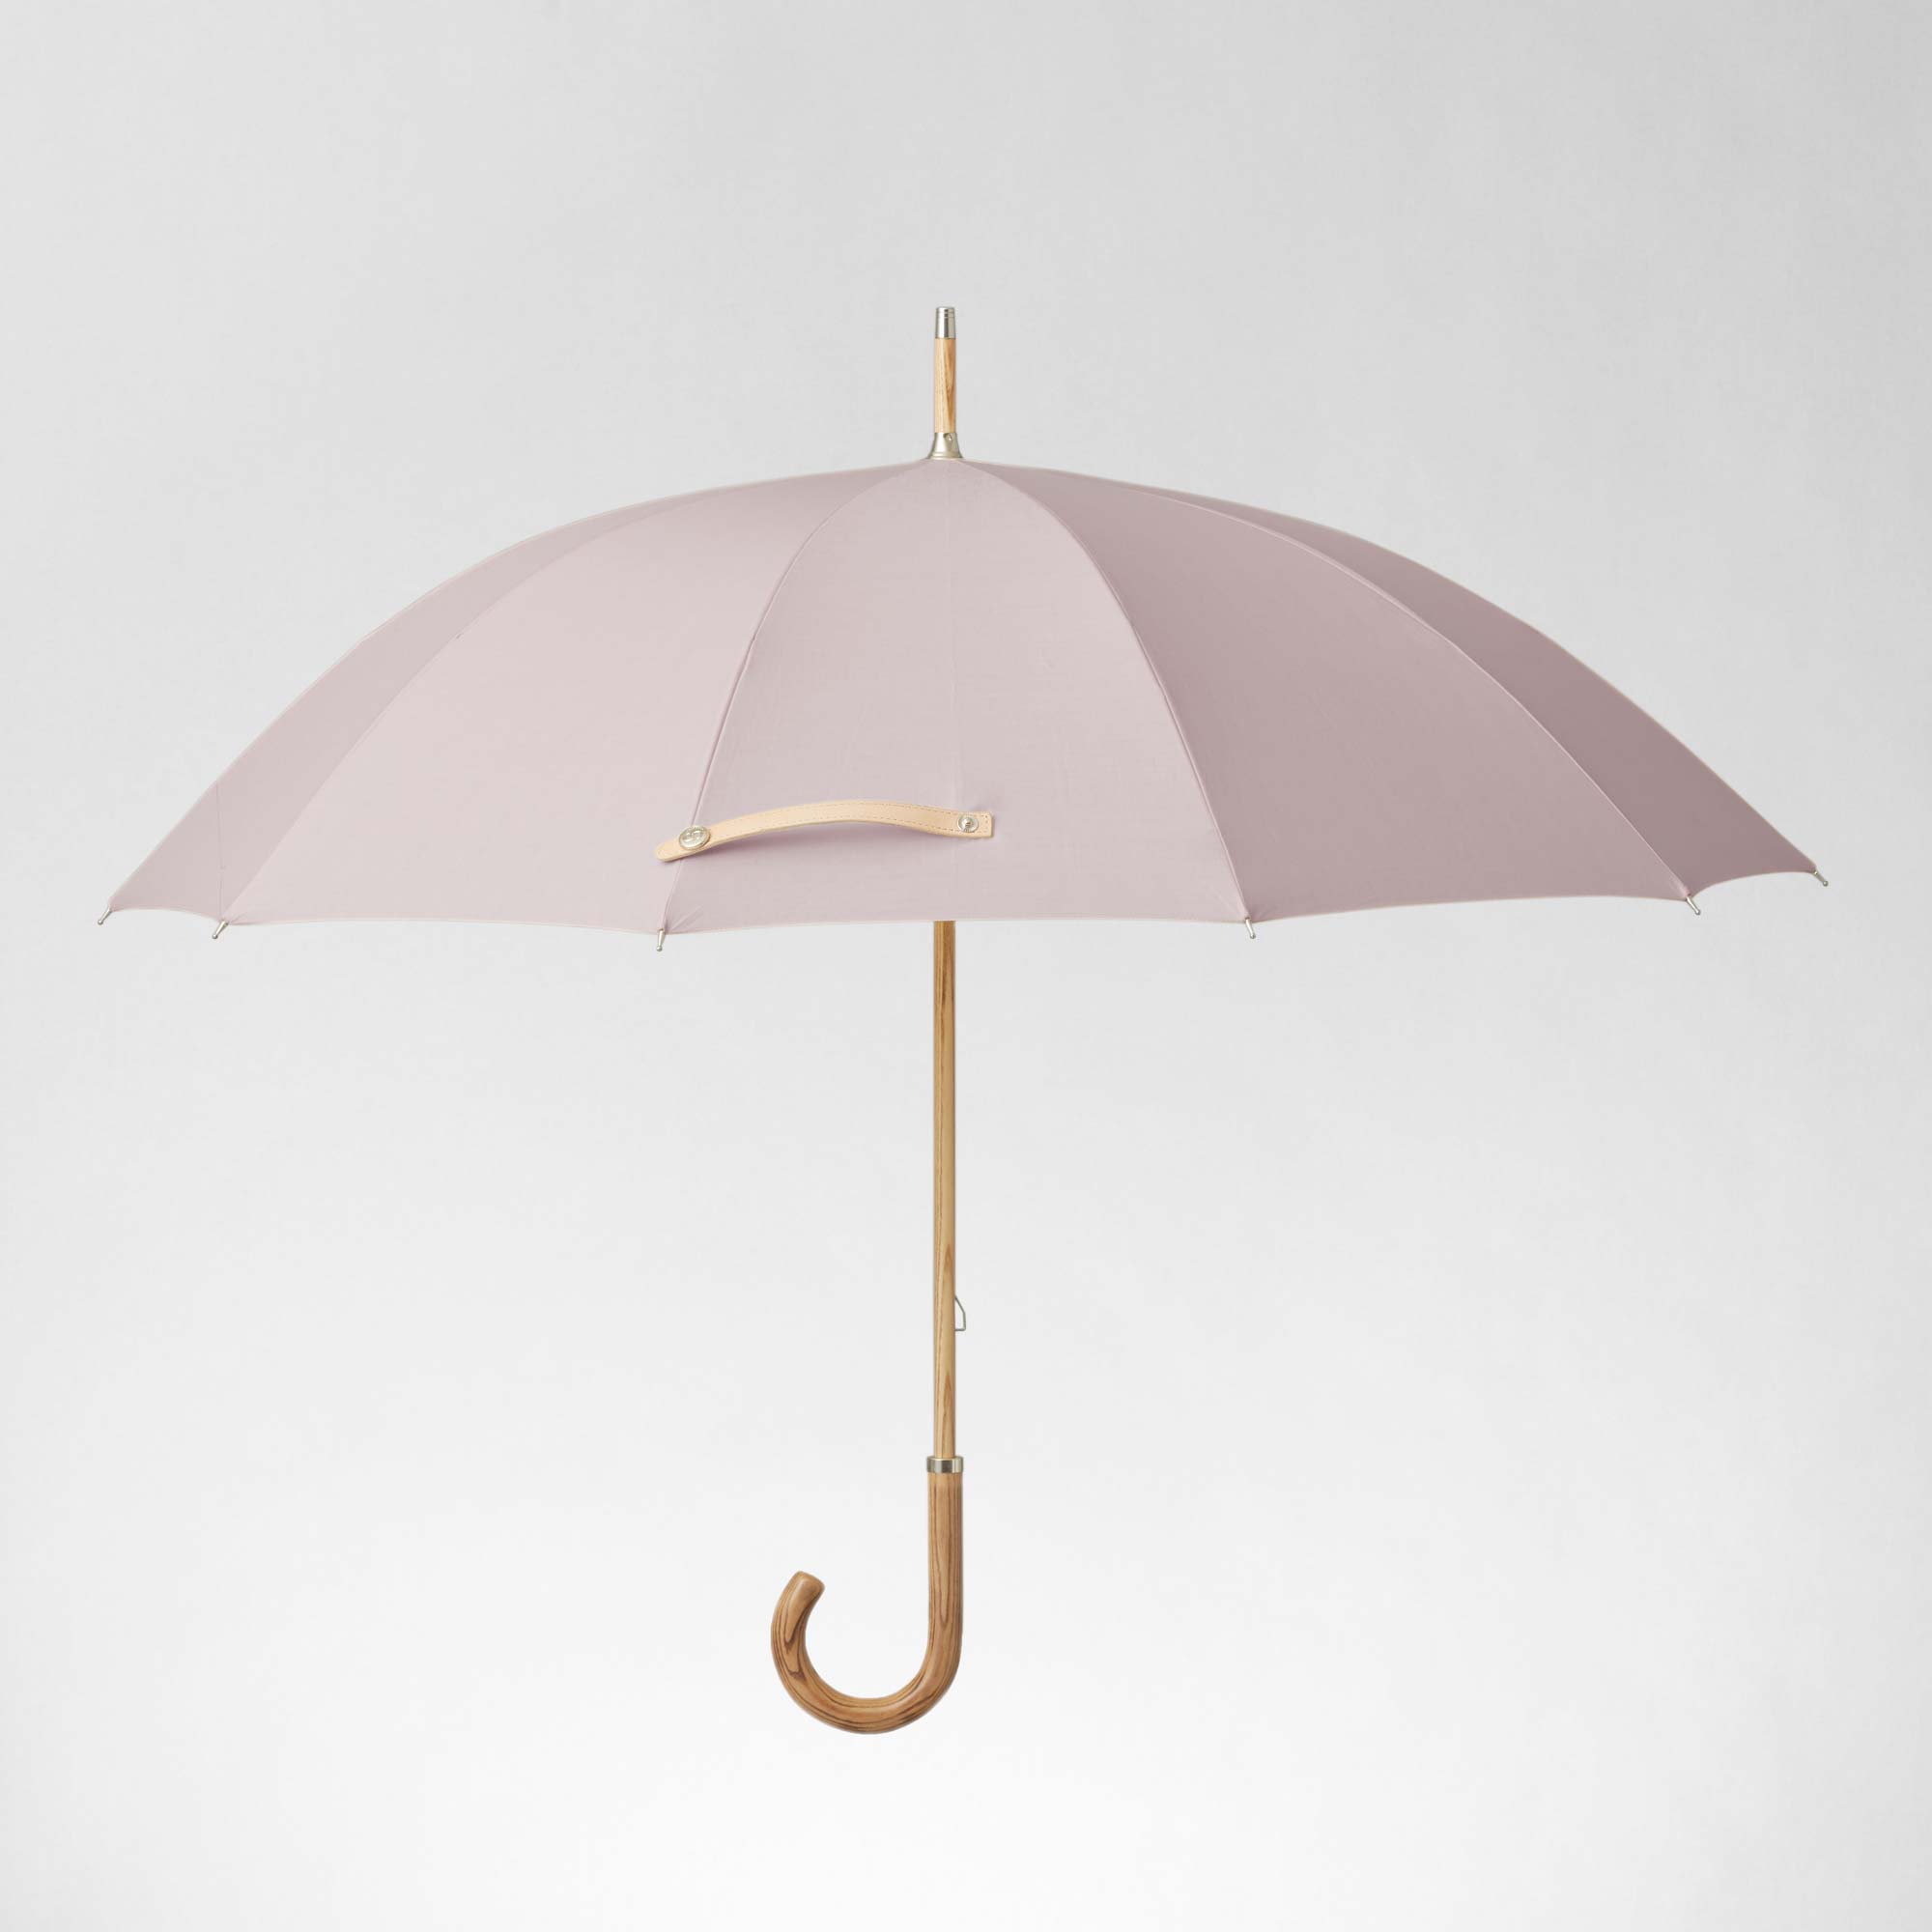 A high quality classic rose umbrella